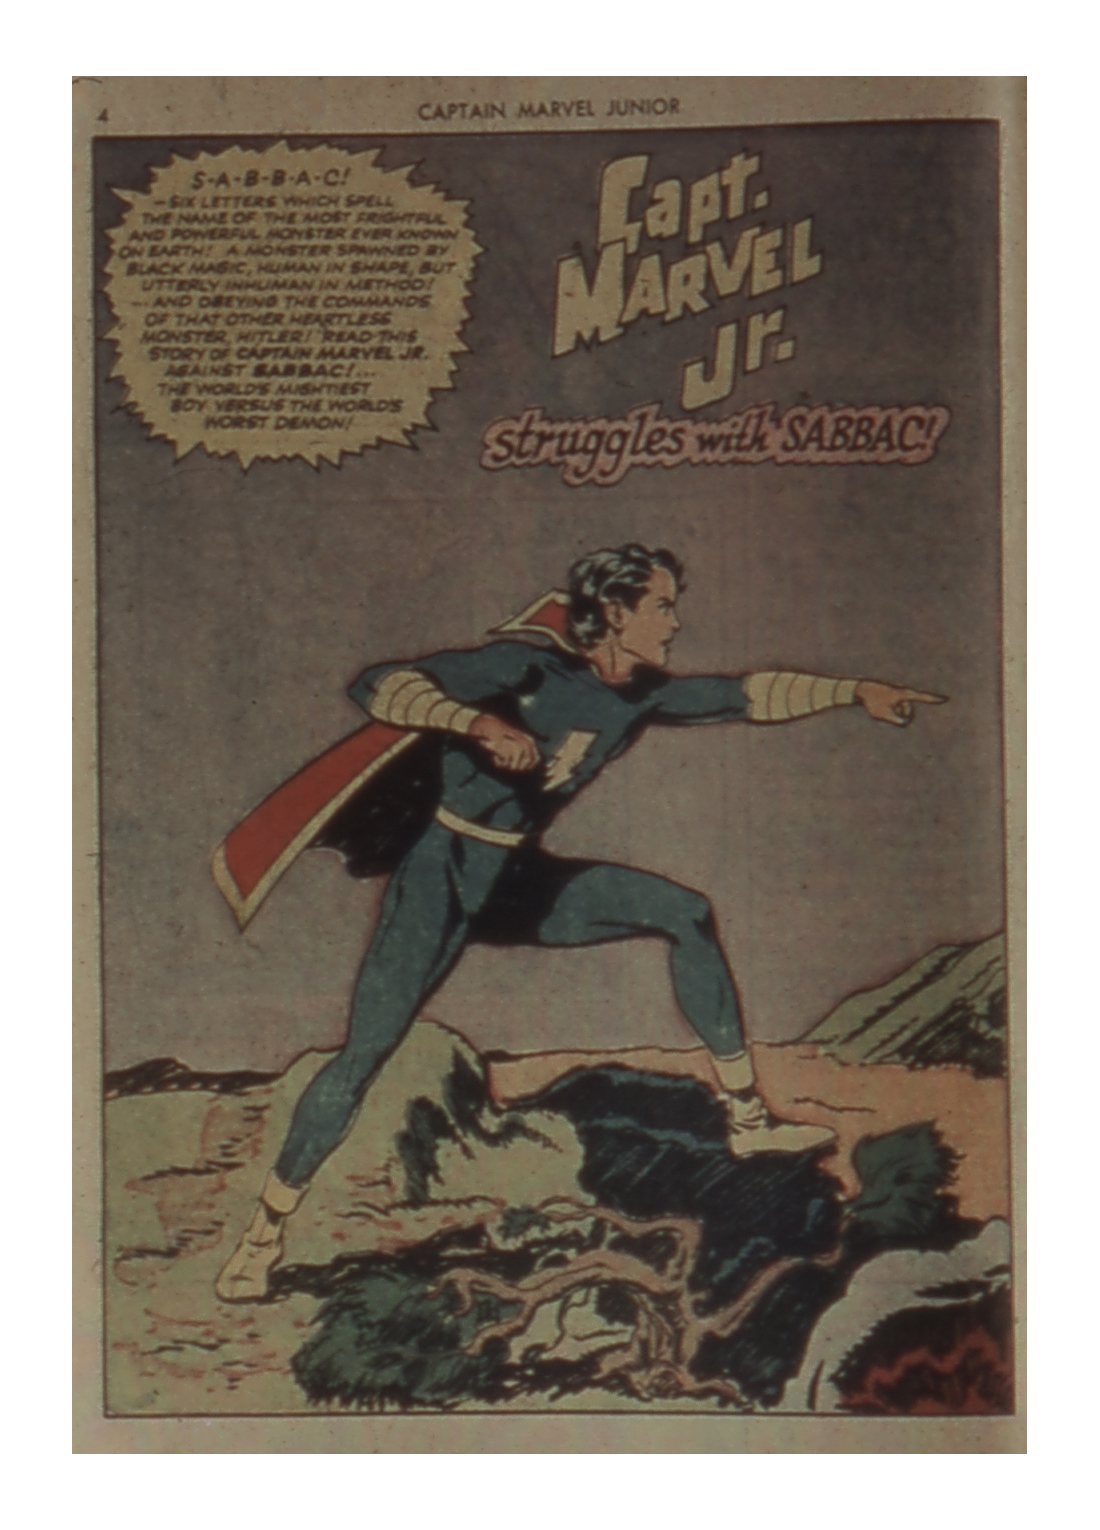 Read online Captain Marvel, Jr. comic -  Issue #4 - 5